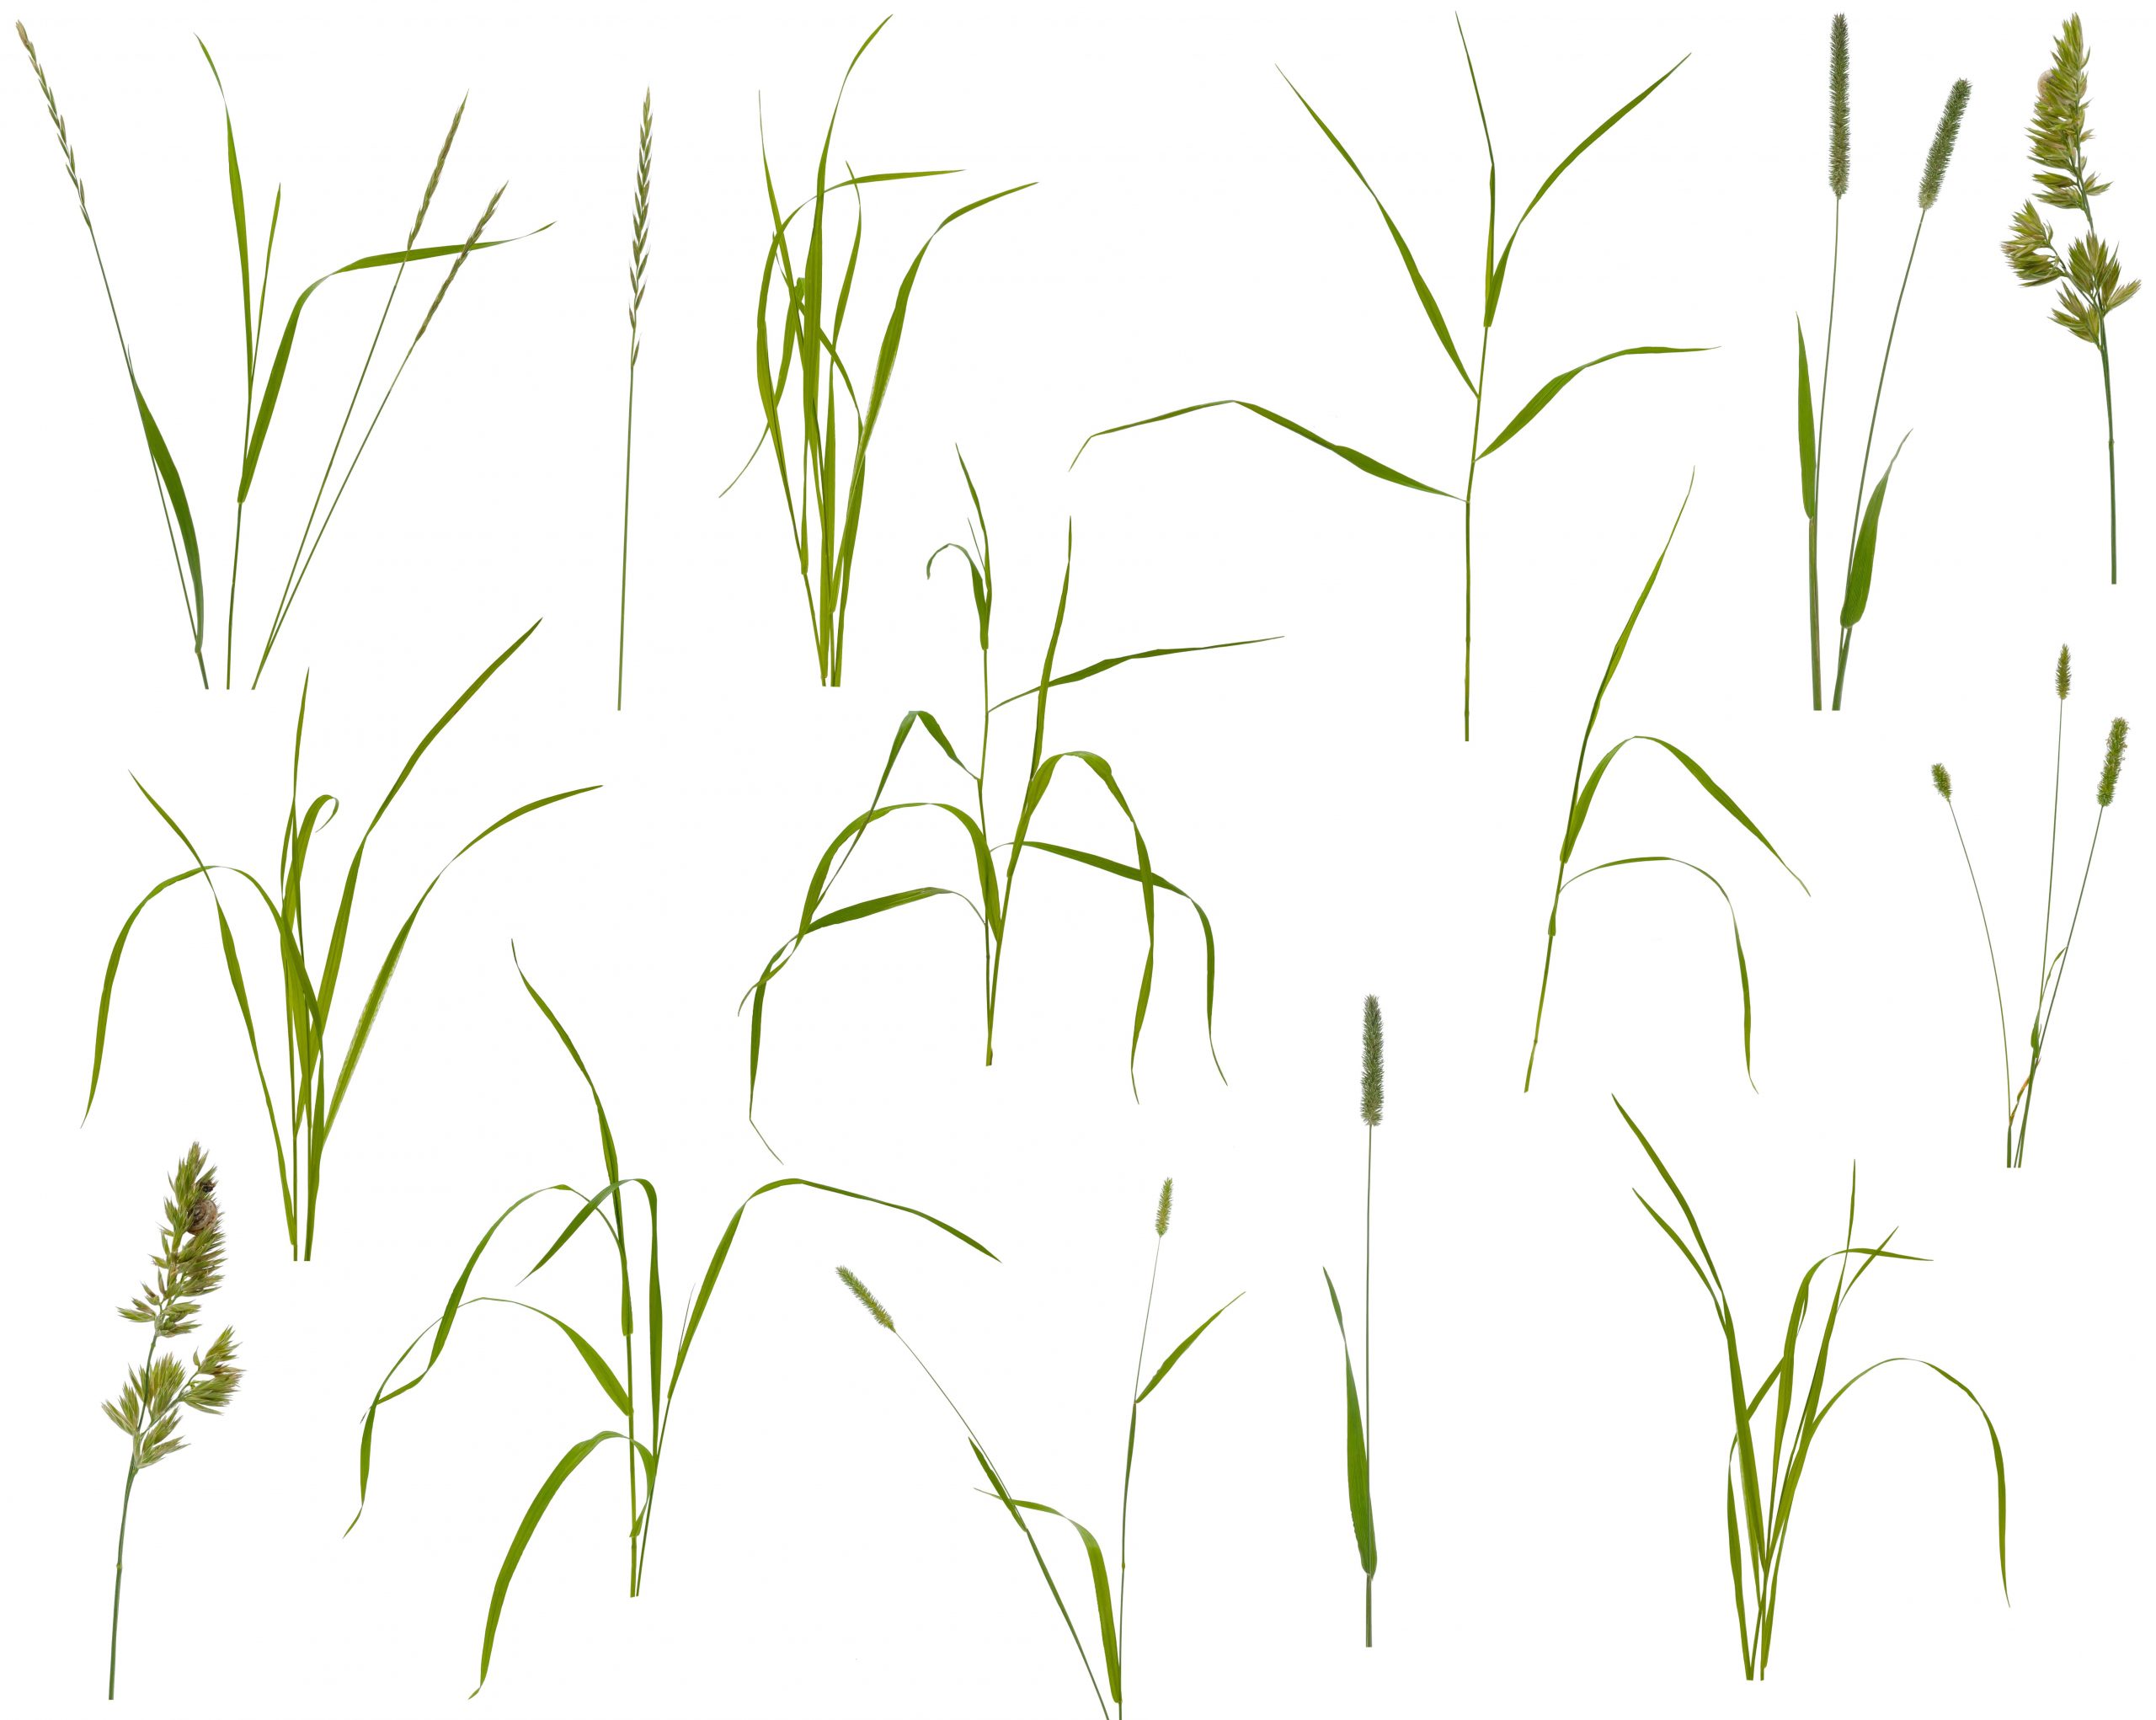 Different types of invasive grasses.